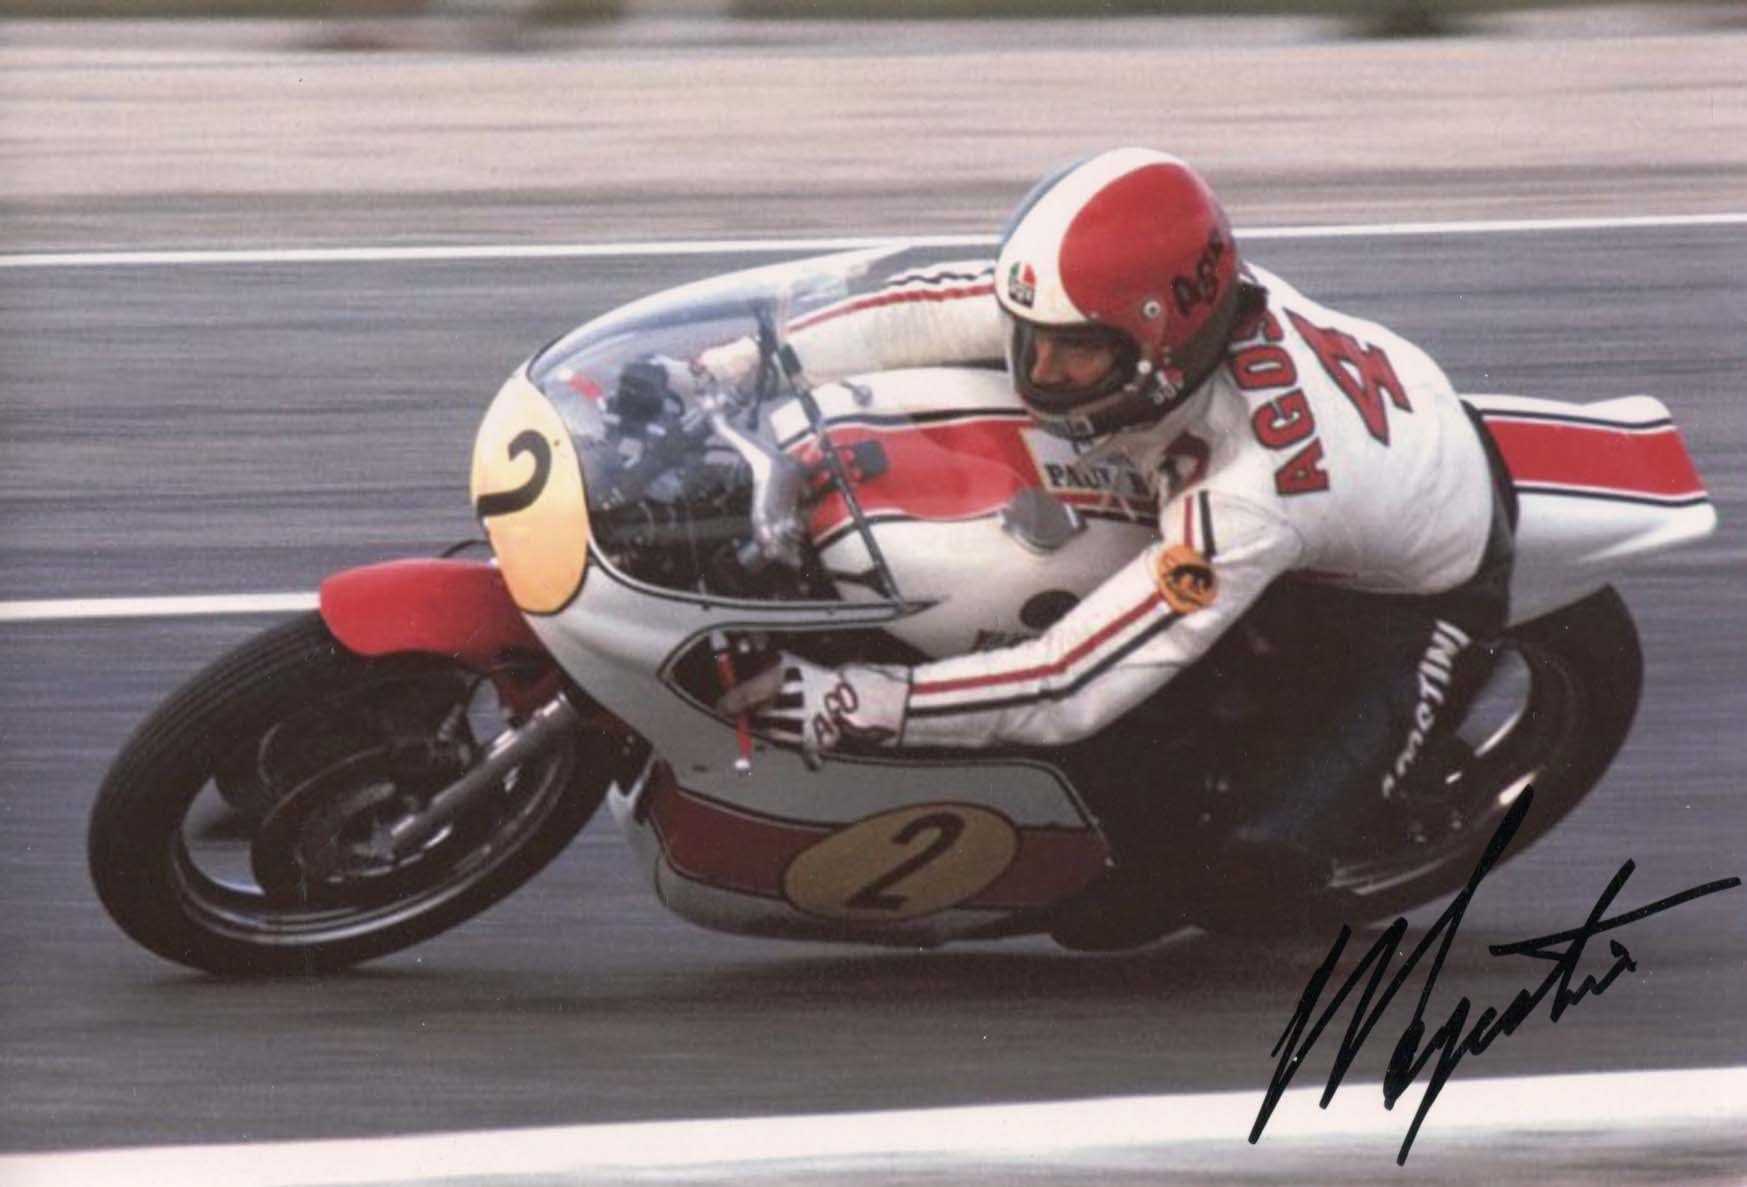 Giacomo Agostini Autograph Autogramm | ID 7792946839701